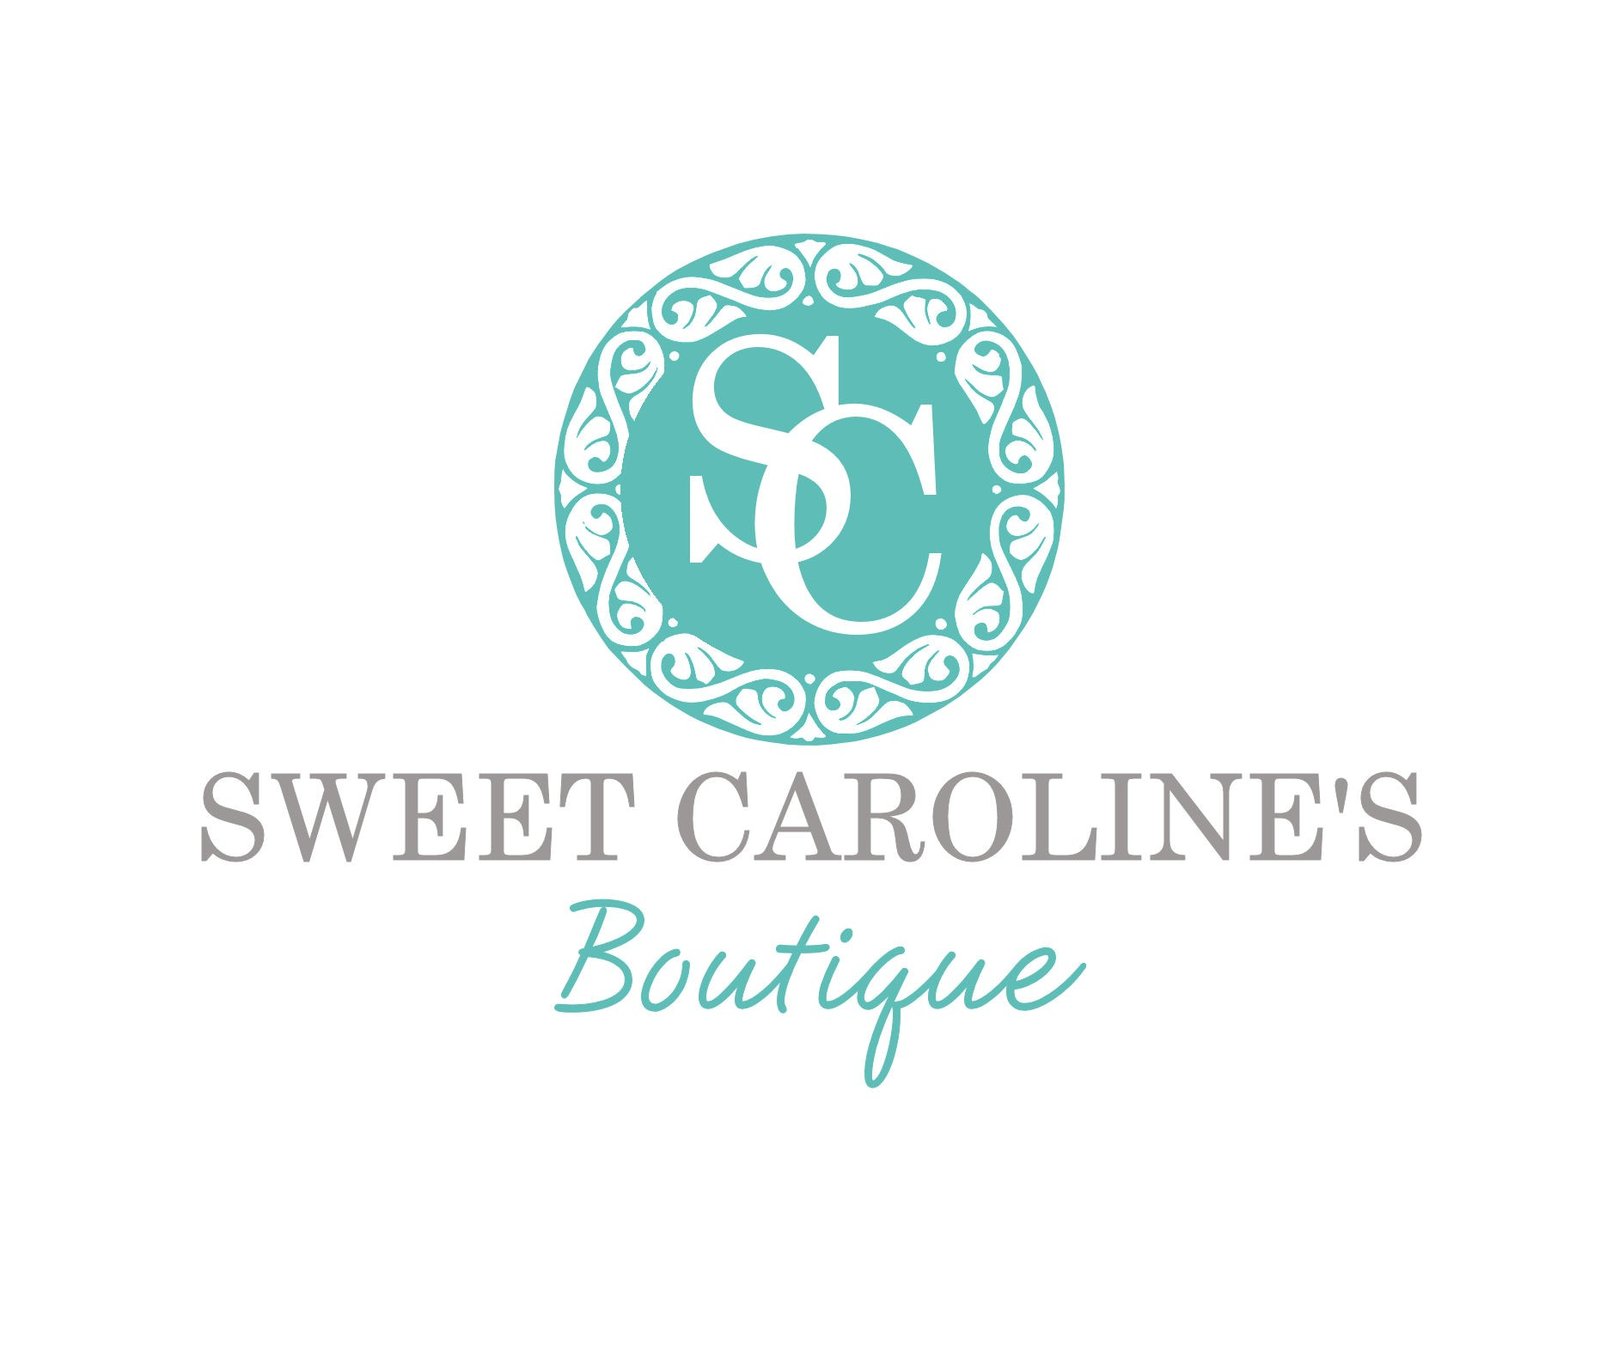 Sweet Caroline's Boutique